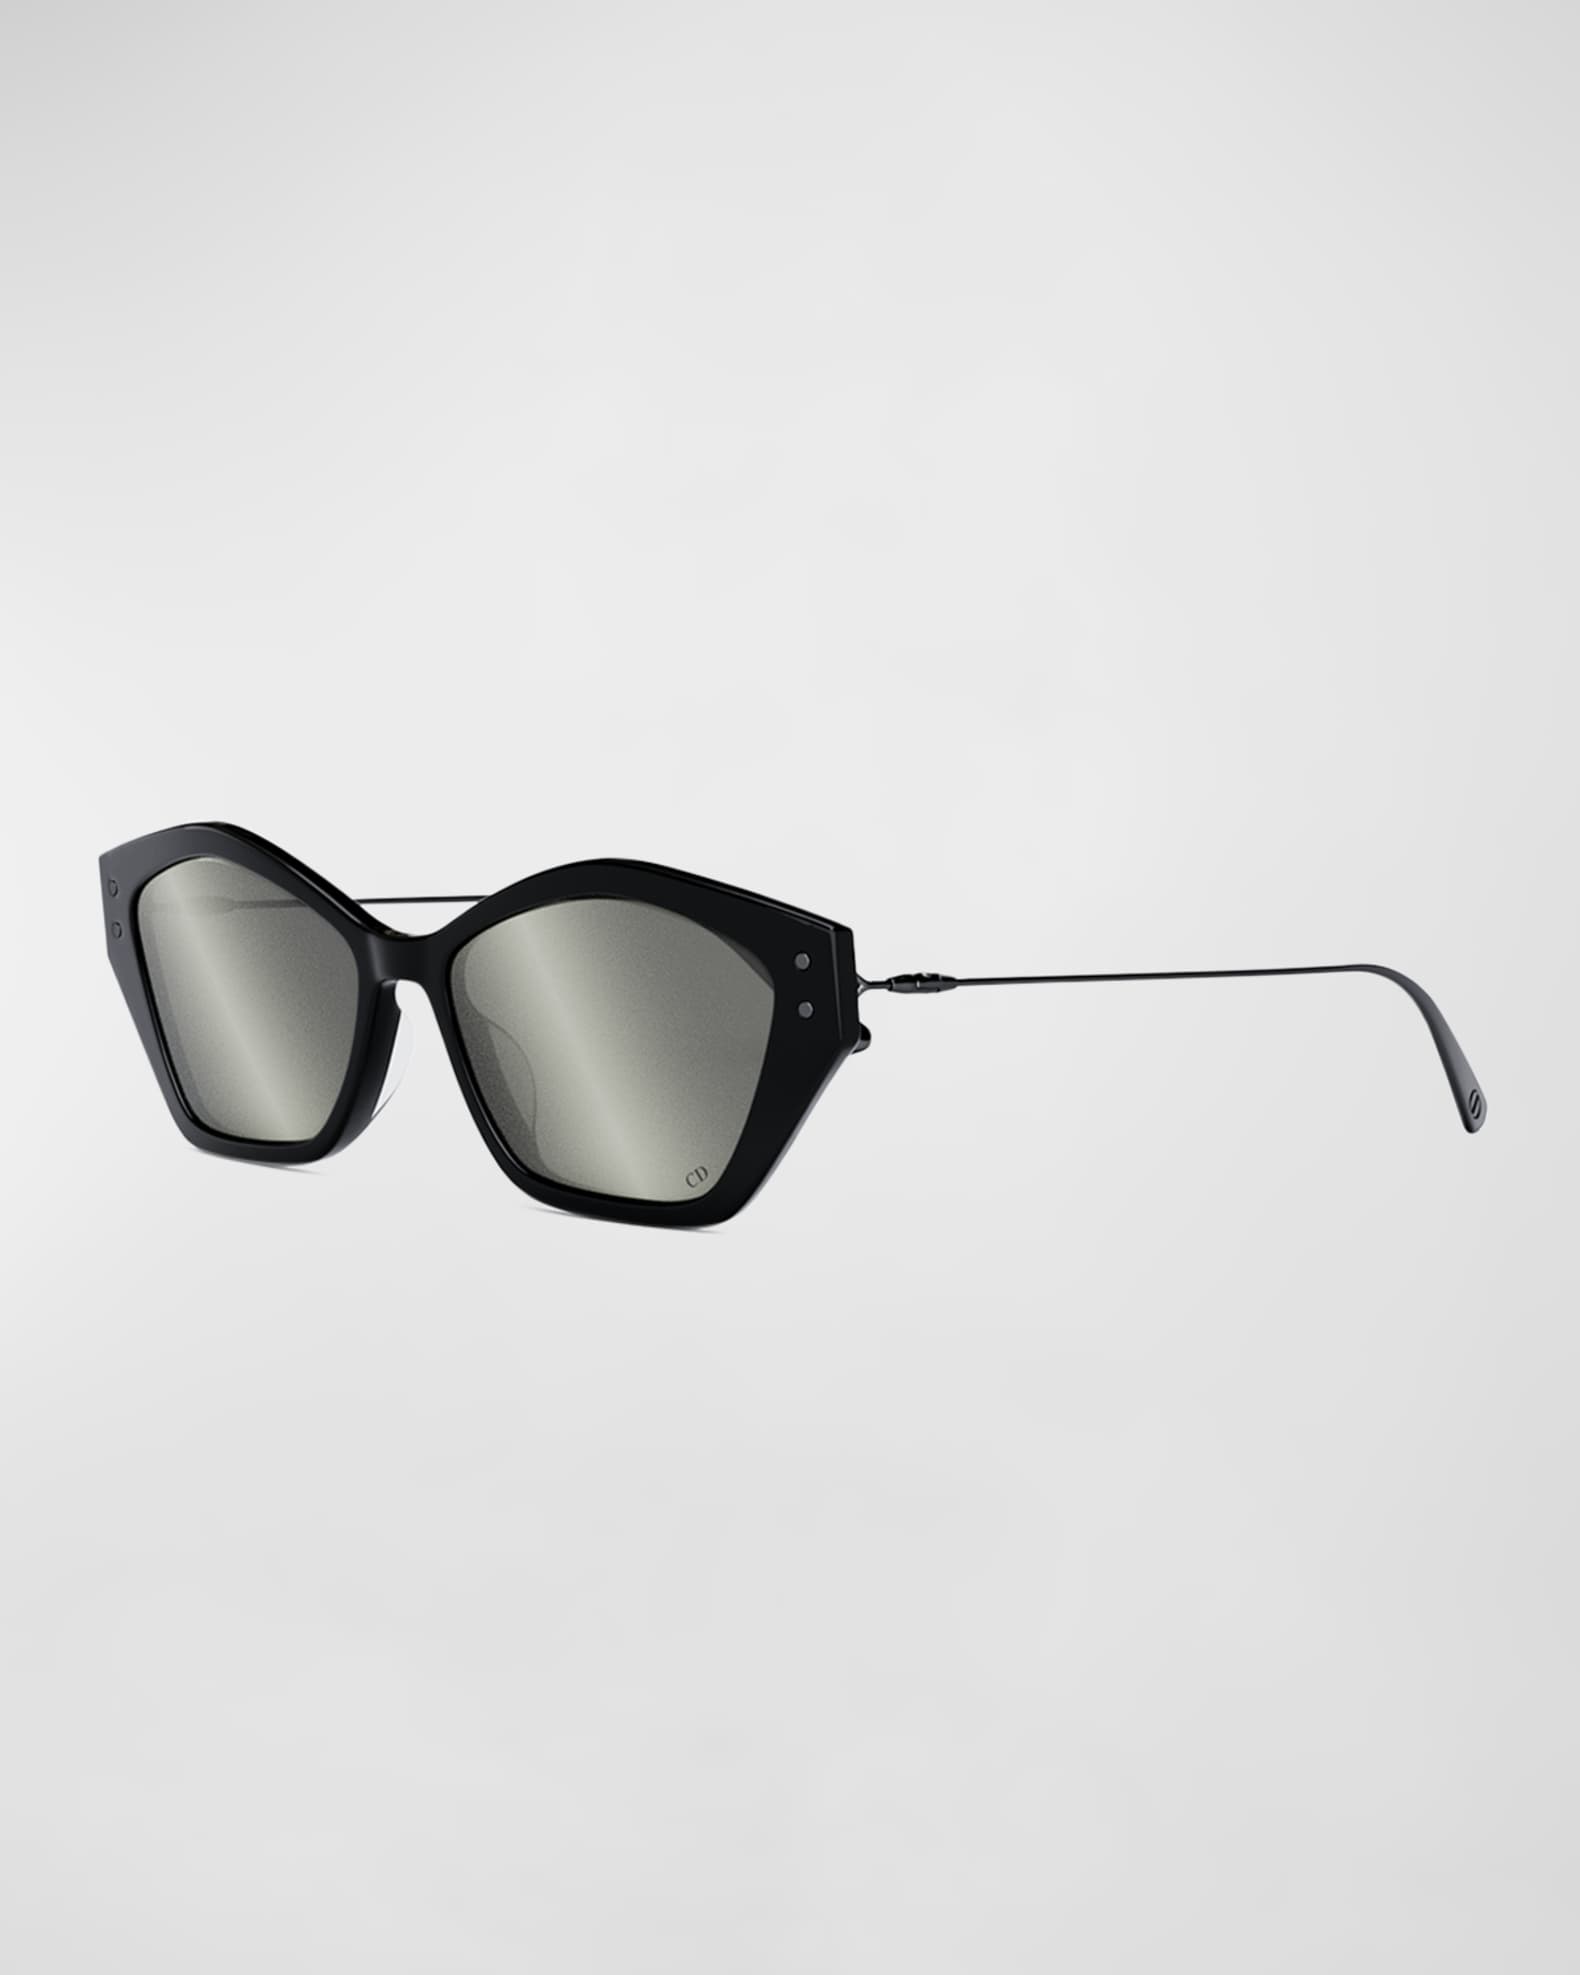 91 Best DIOR Sunglasses ideas  dior sunglasses, dior, maria